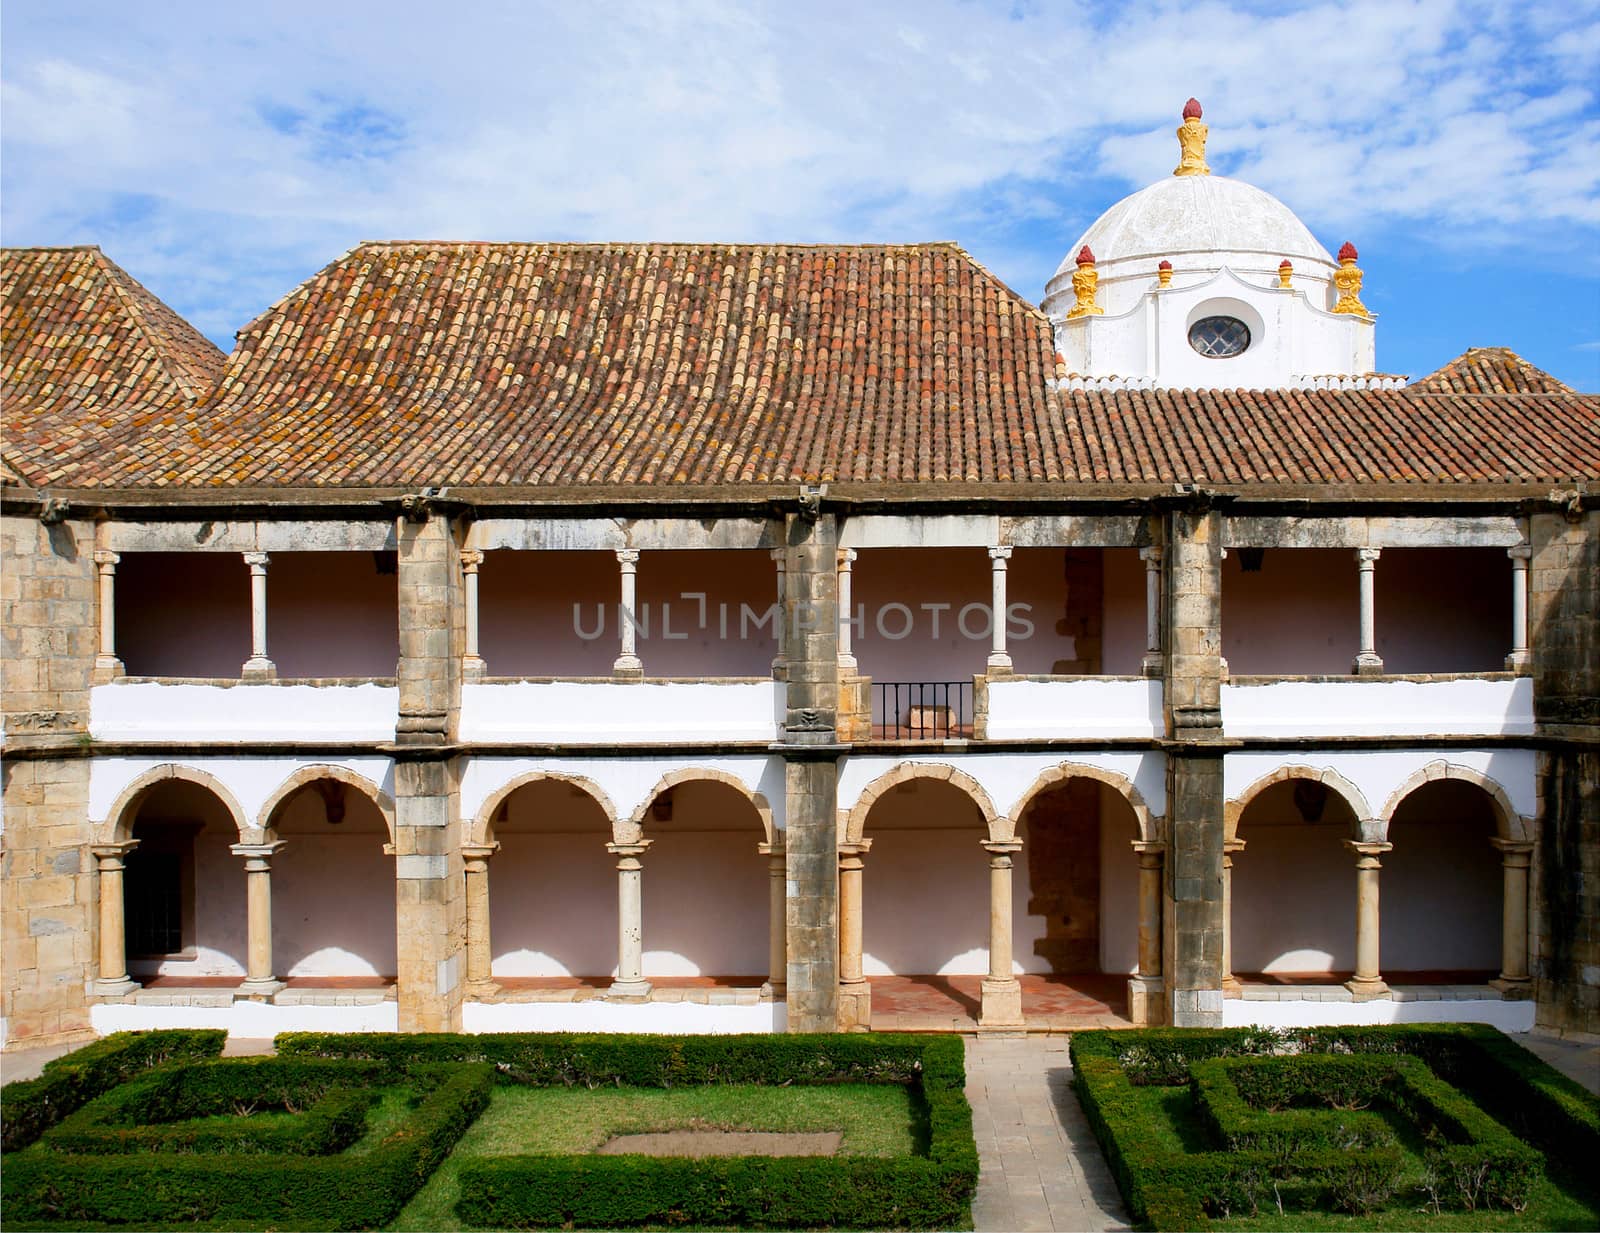 "Nossa senhora da Assumpçao" convent in Faro, Algarve, Portugal